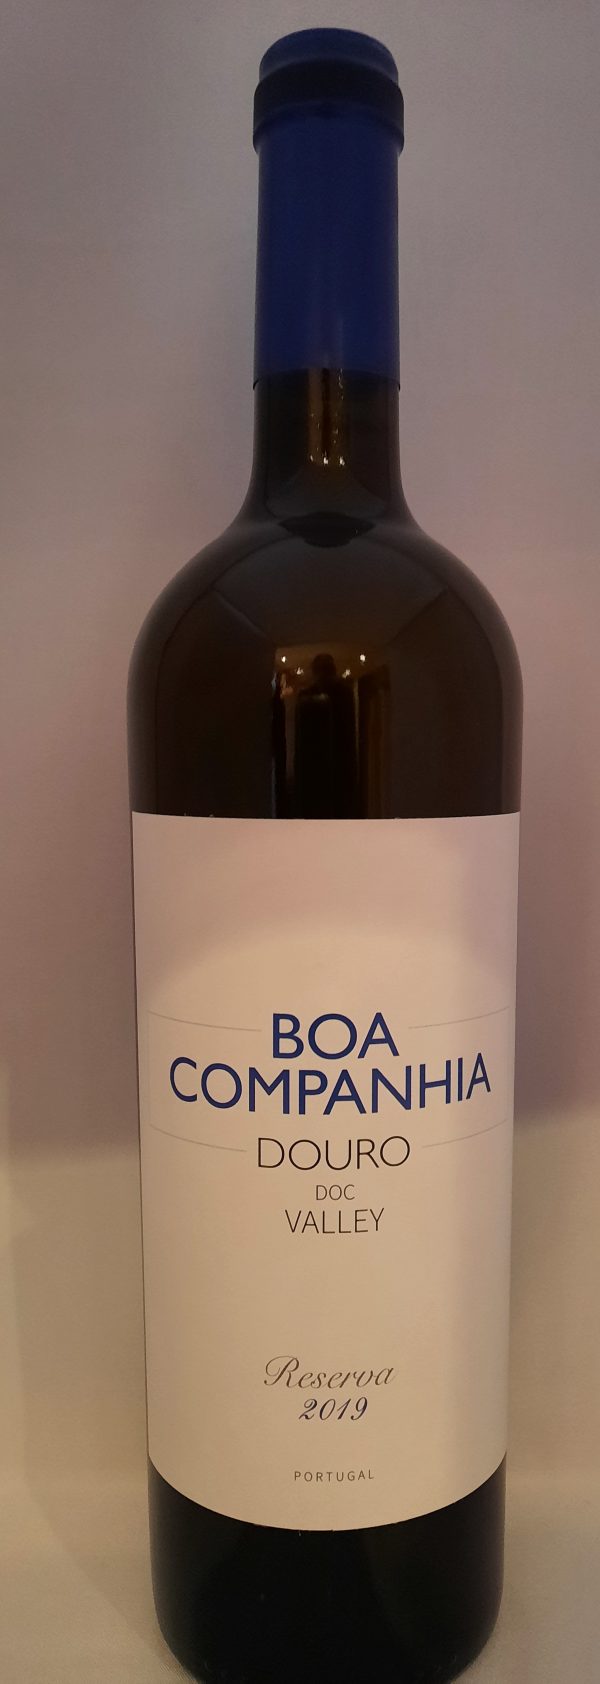 Boa companhia" Douro blanc RESERVA 2019